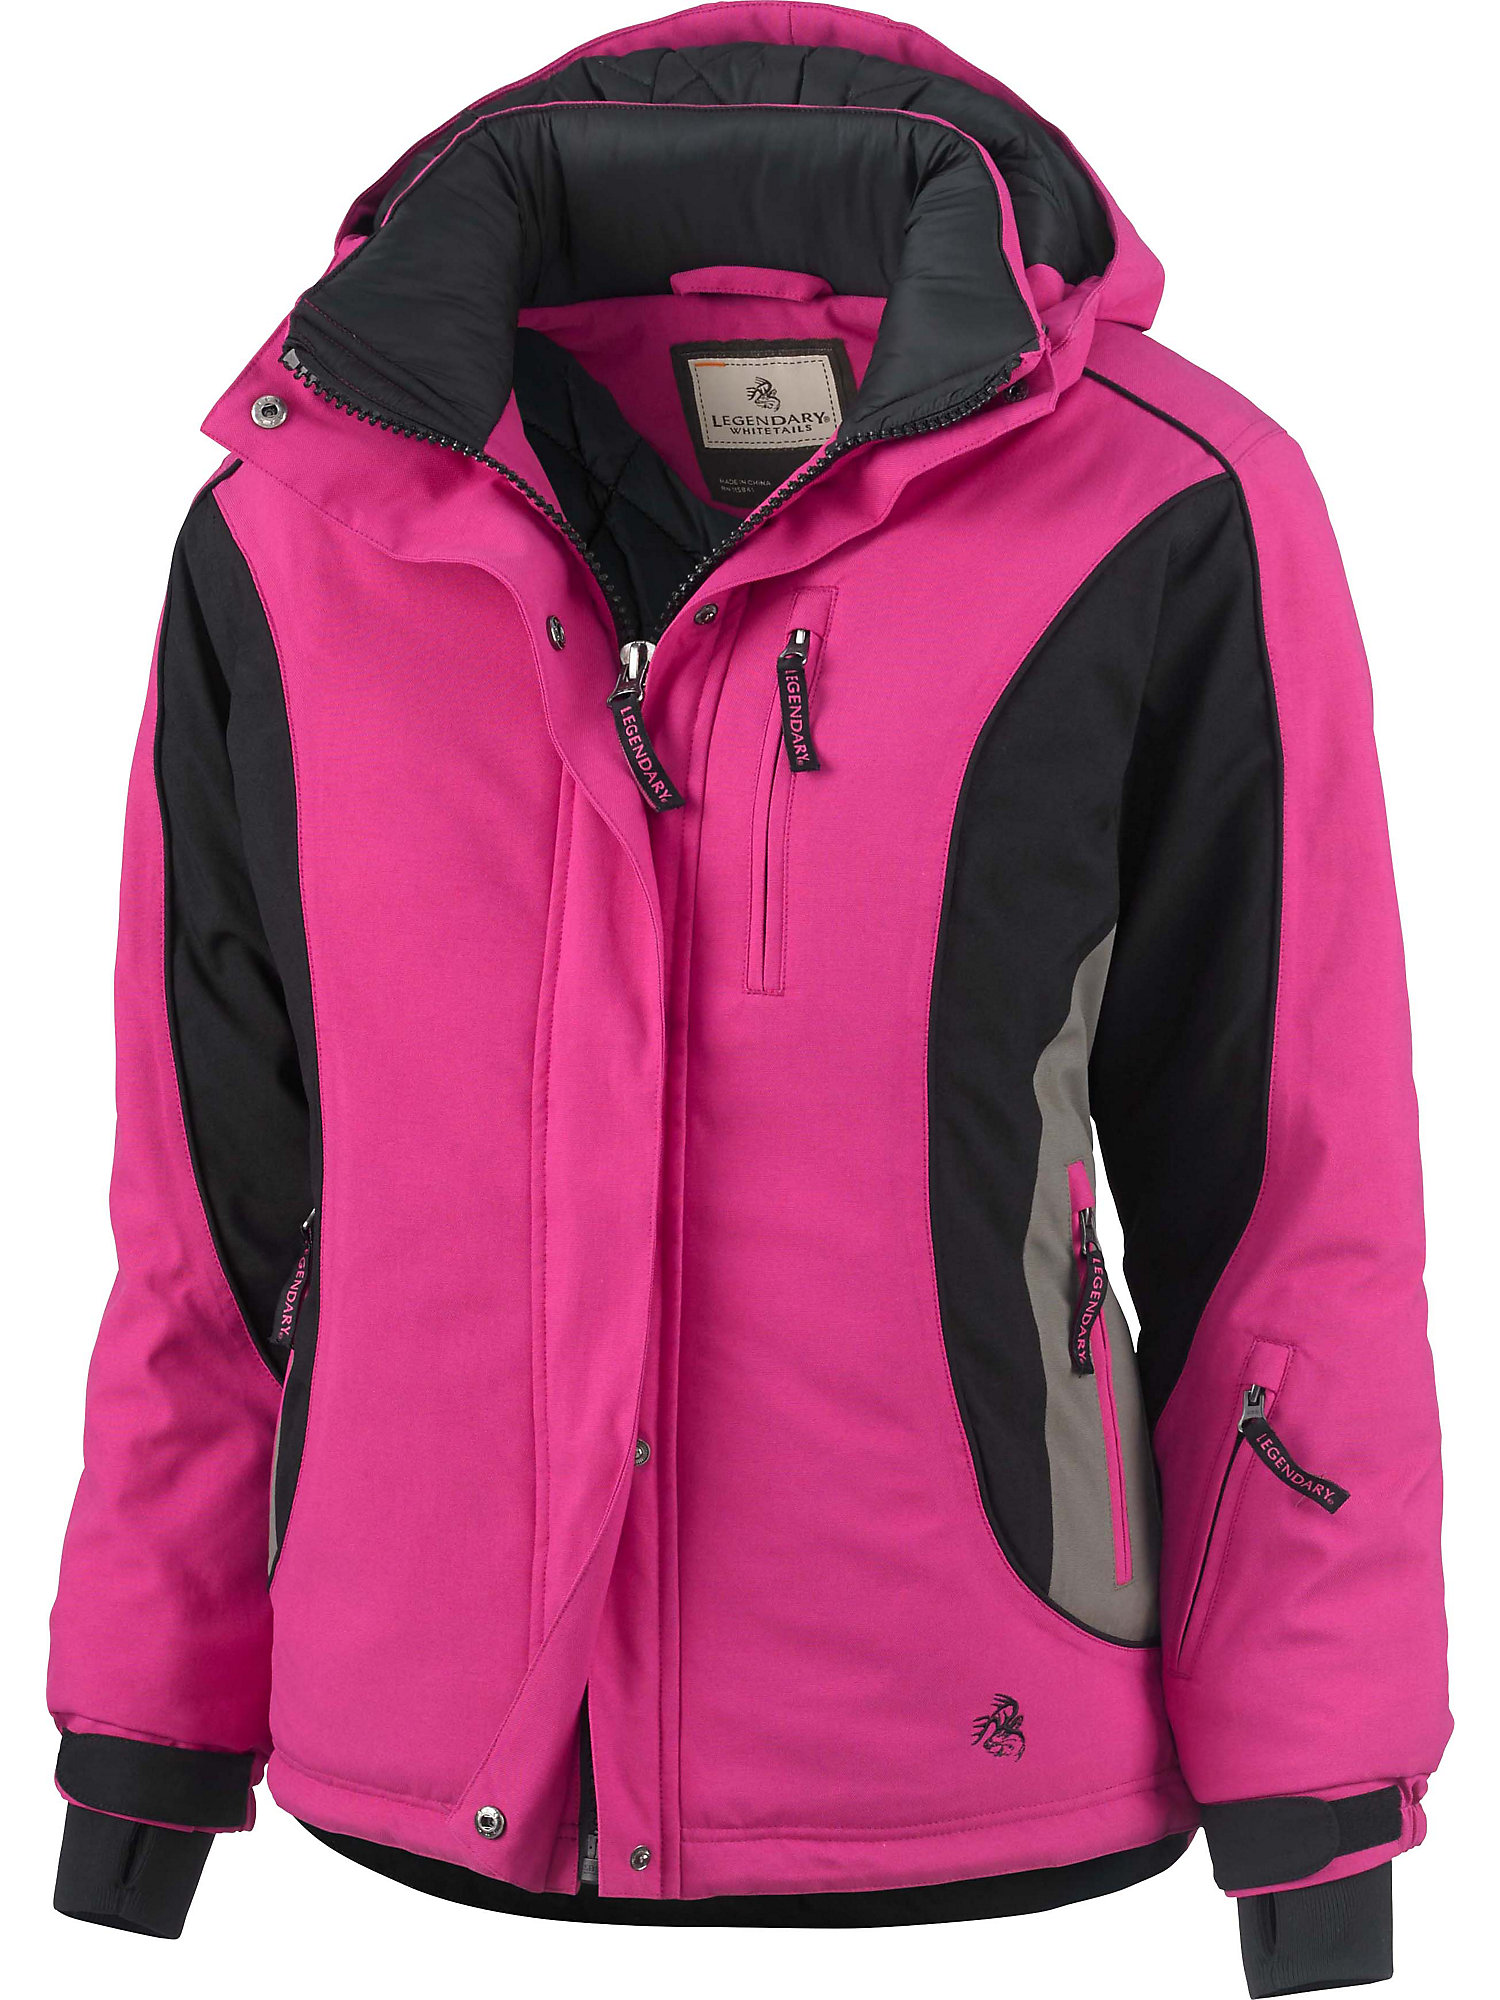 Legendary Whitetails Women's Polar Trail Pro Series Jacket | eBay